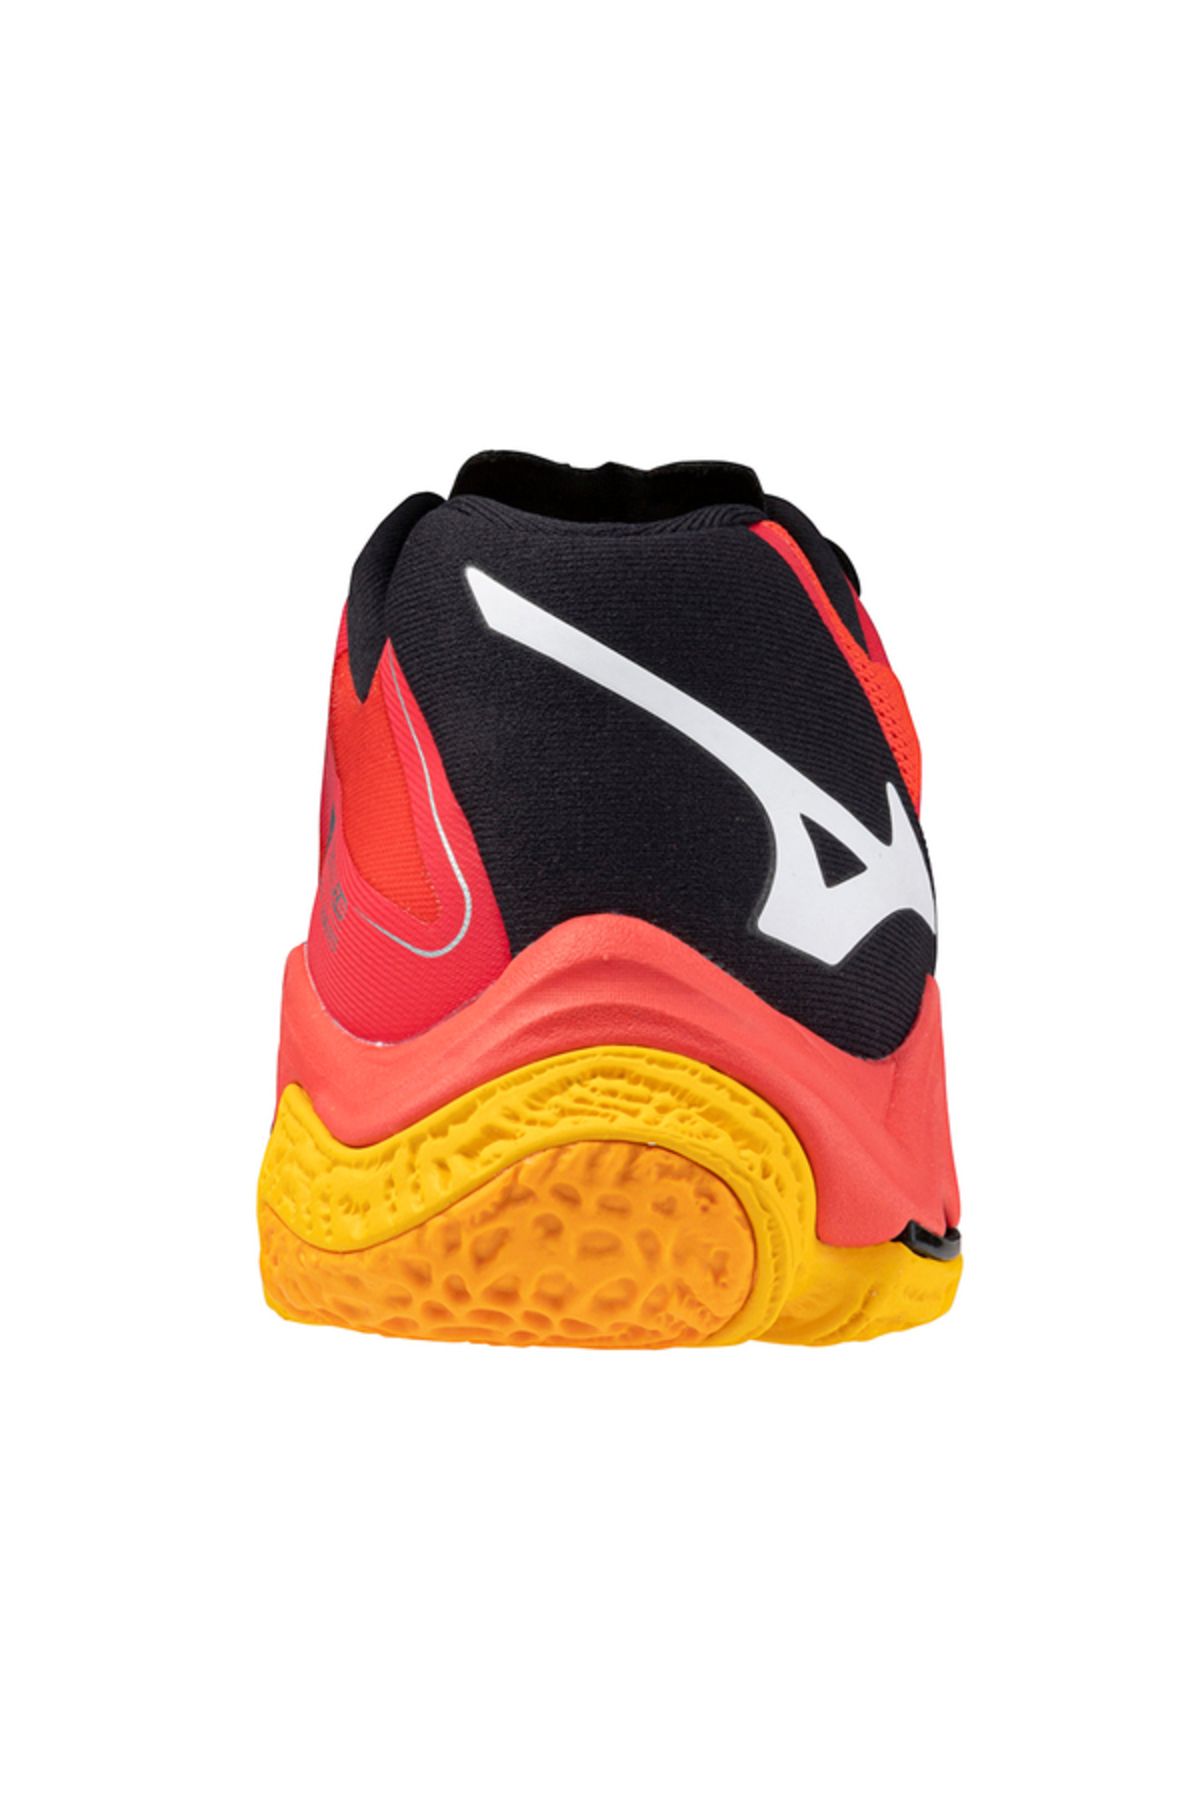 Mizuno کفش کتانی والیبال یونیسکس مدل Wave Lightning Z8 Unisex